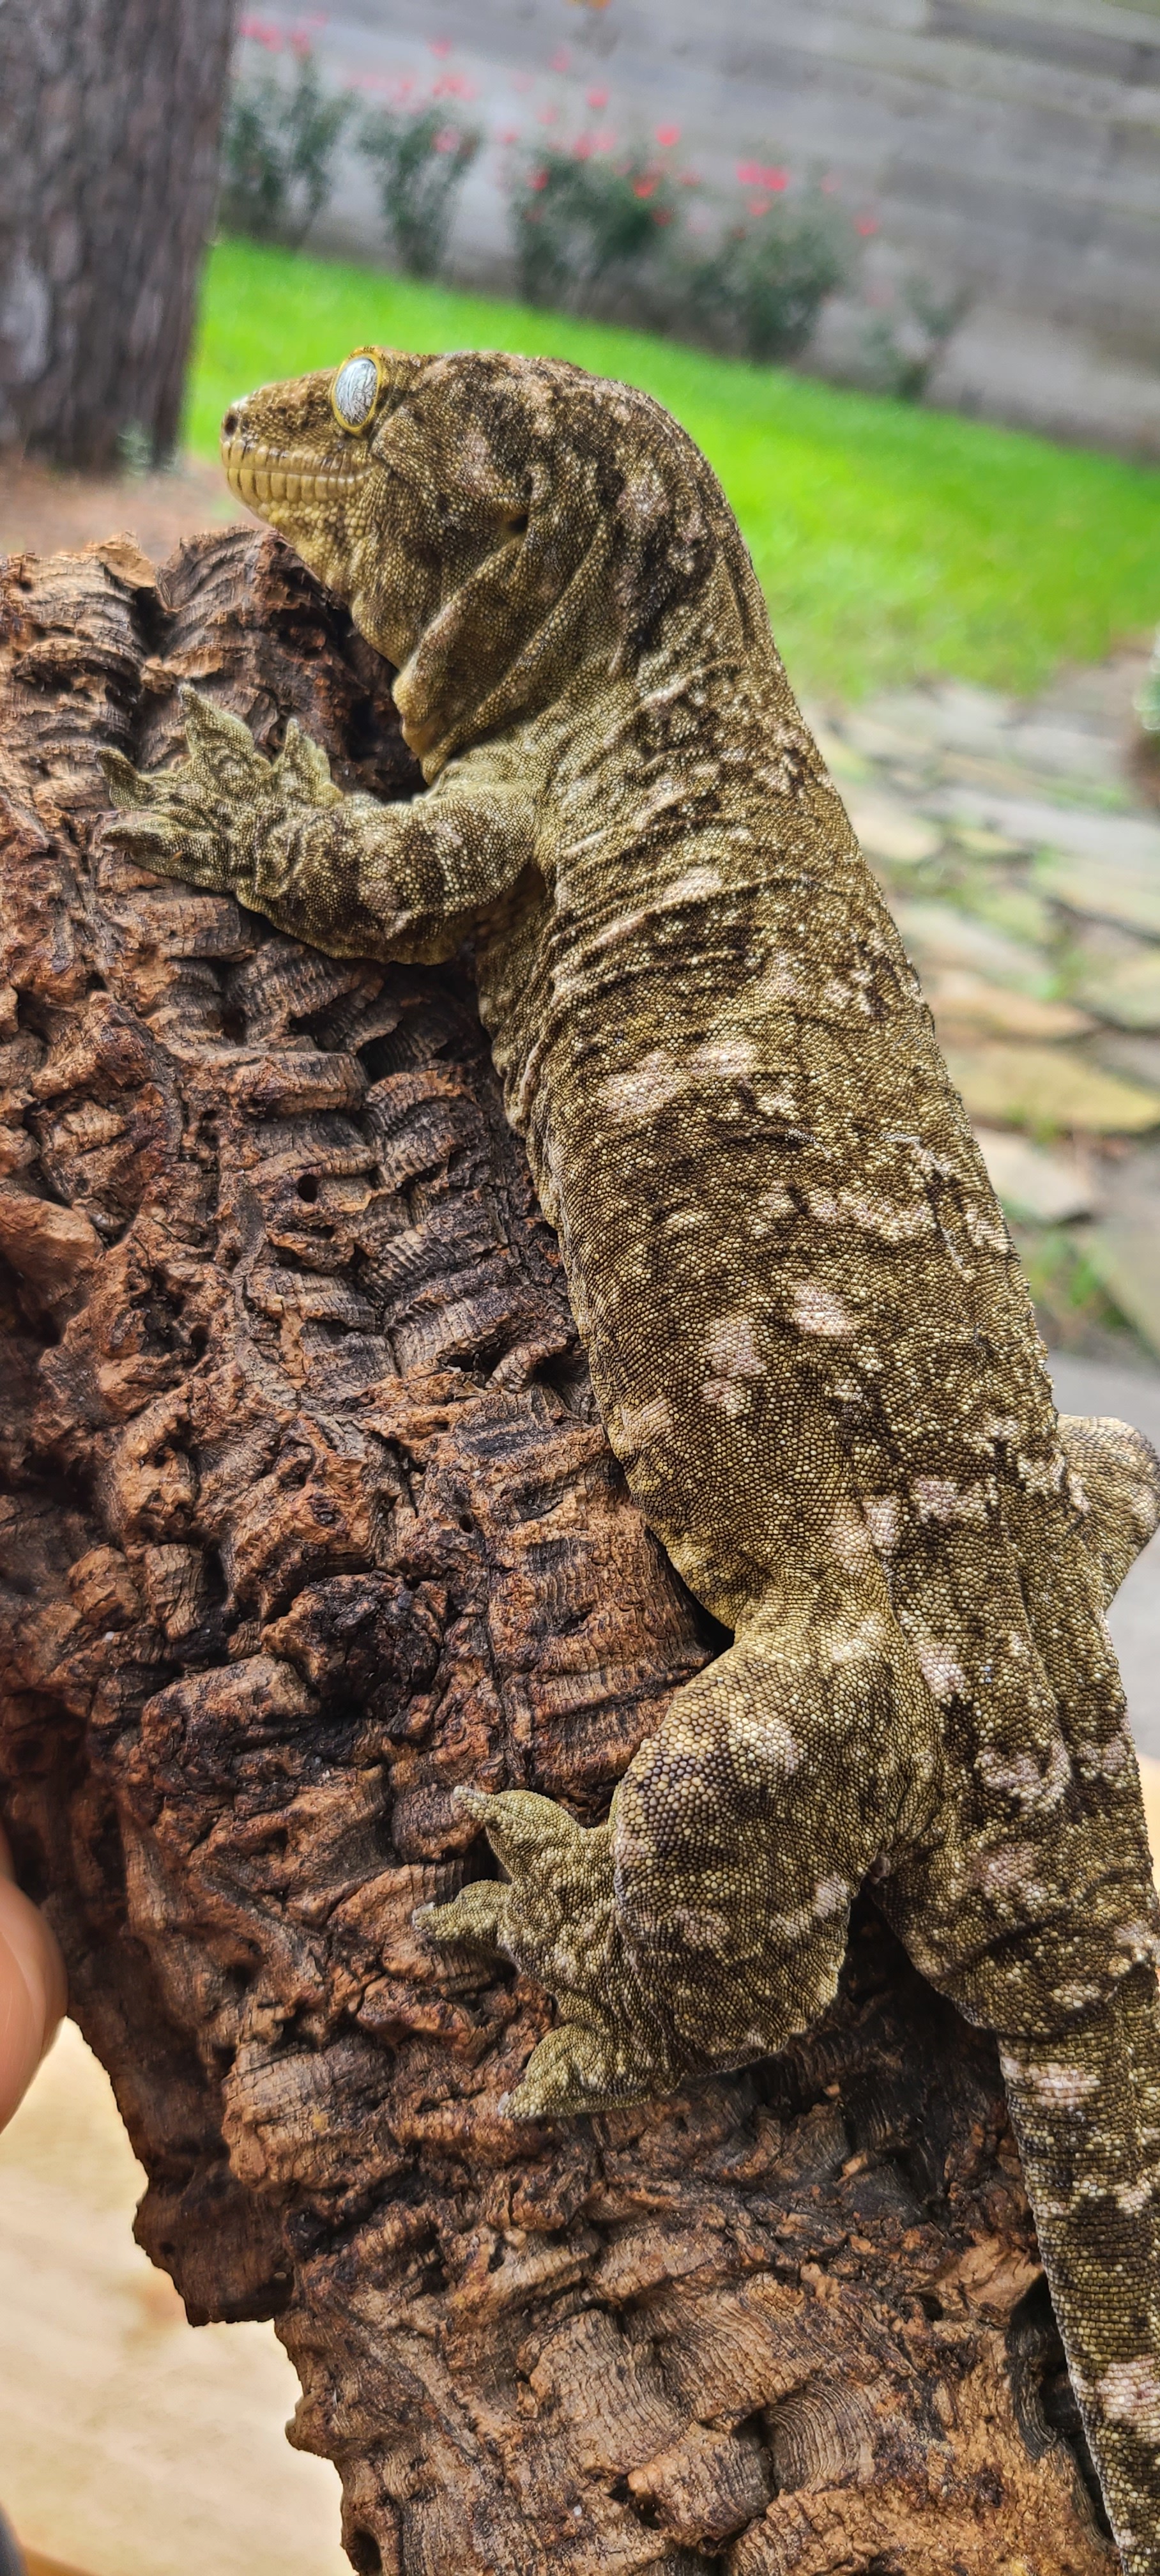 GT-Type A Leachianus Gecko by Robs Rhacs